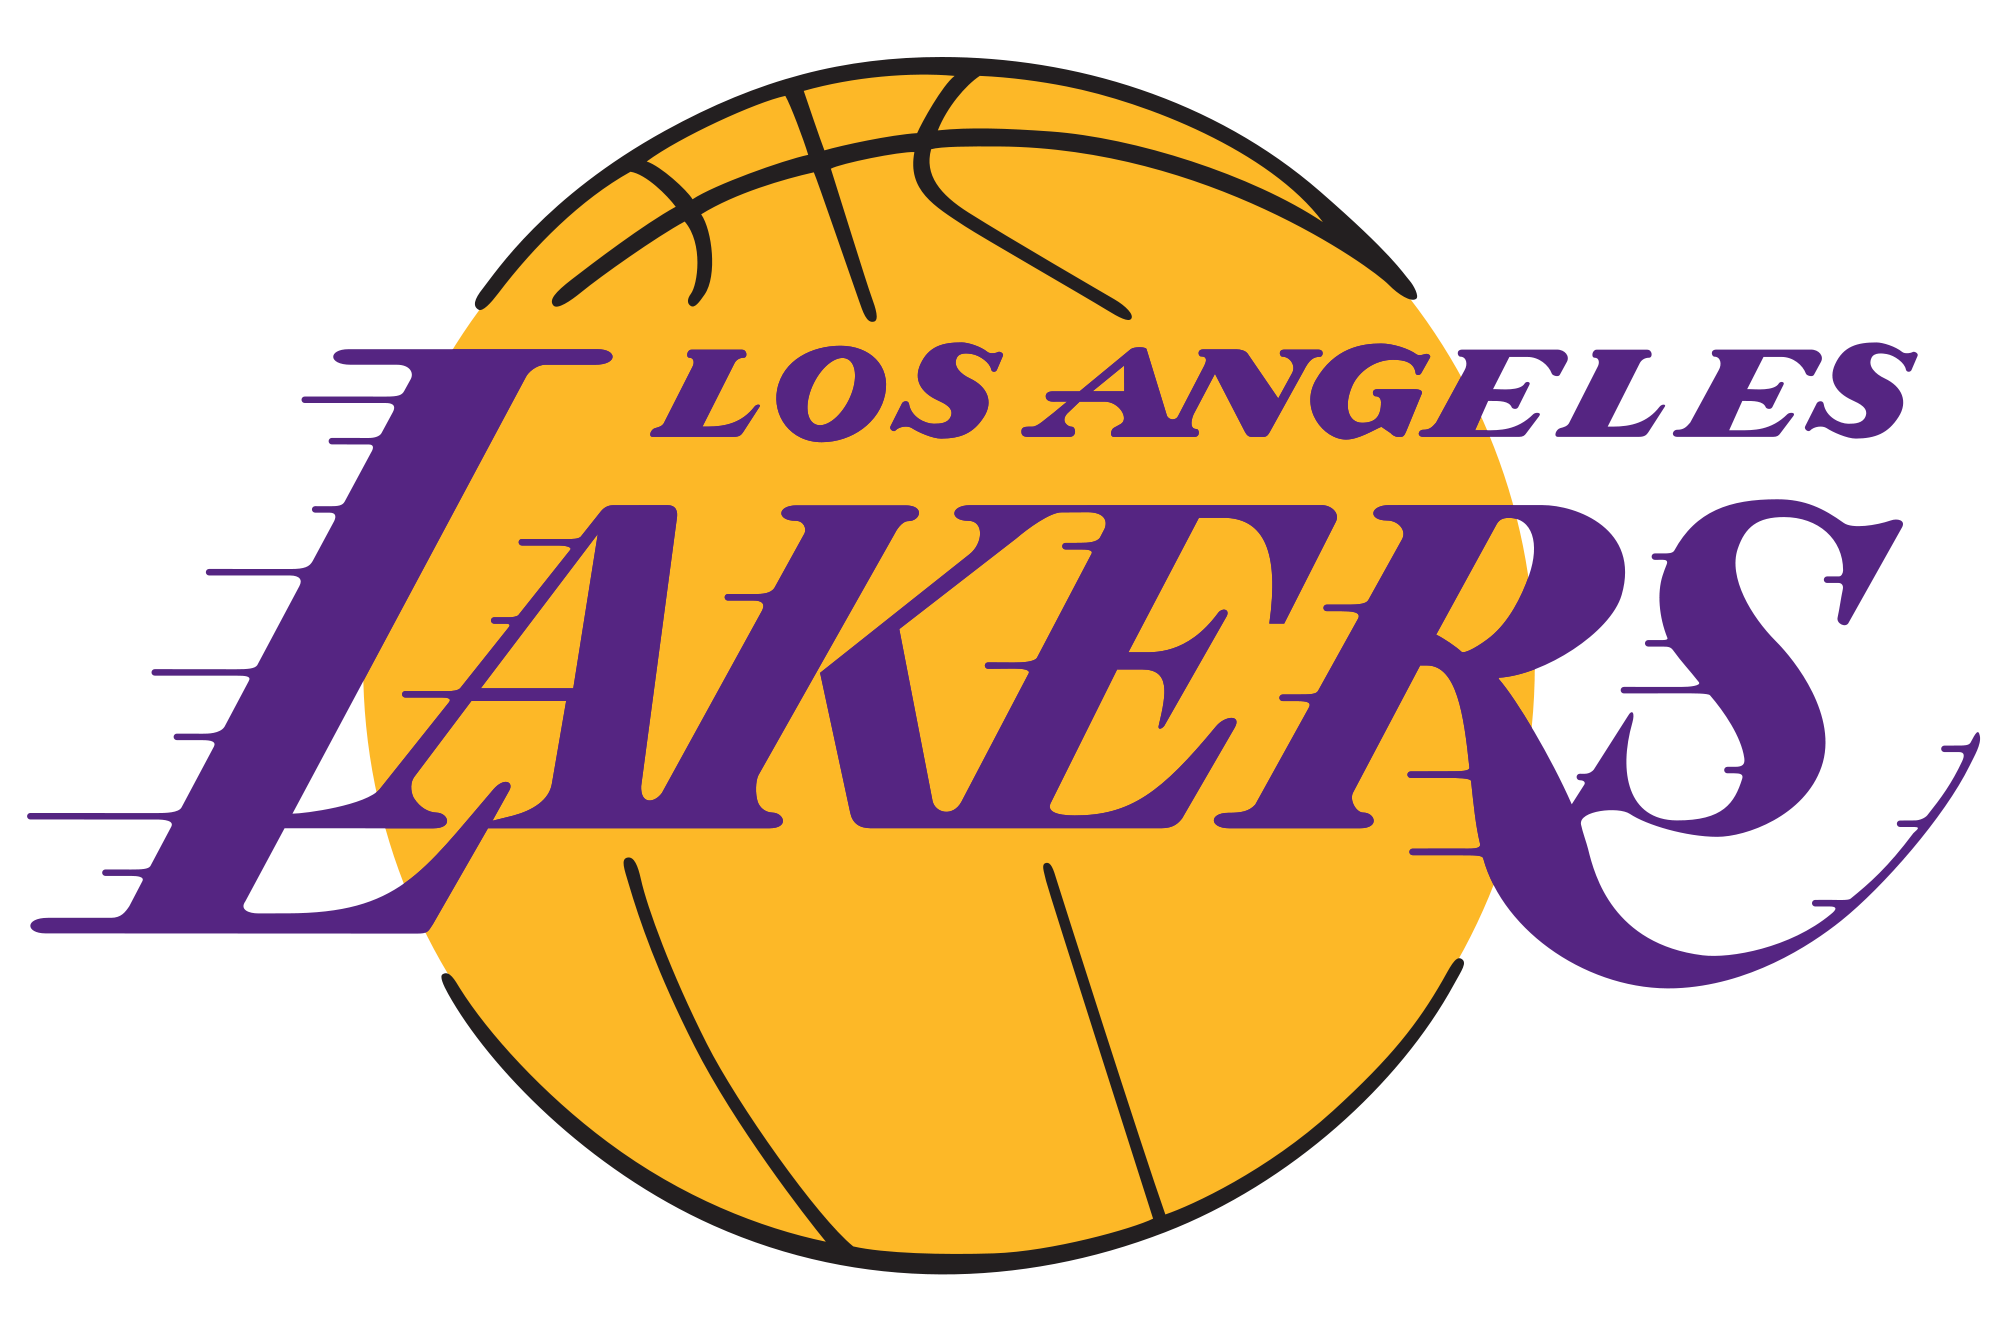 Los Angeles Lakers Logo Wallpaper For Desktop